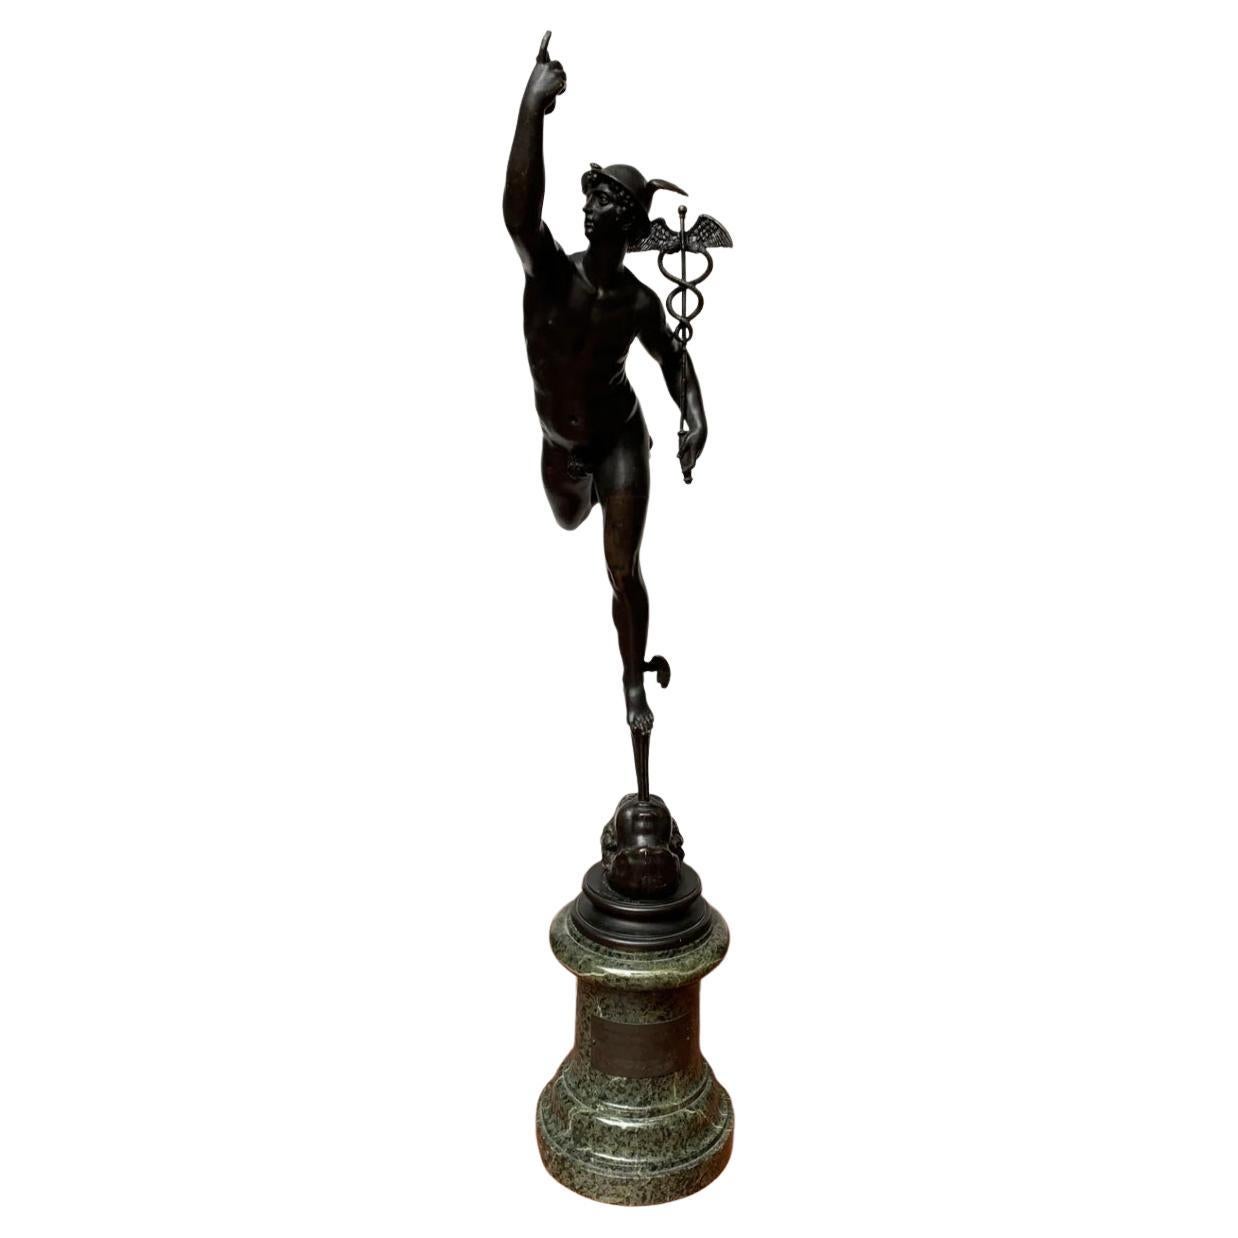 Hermes Bronze Sculpture by Antonio Pandiani from 1800